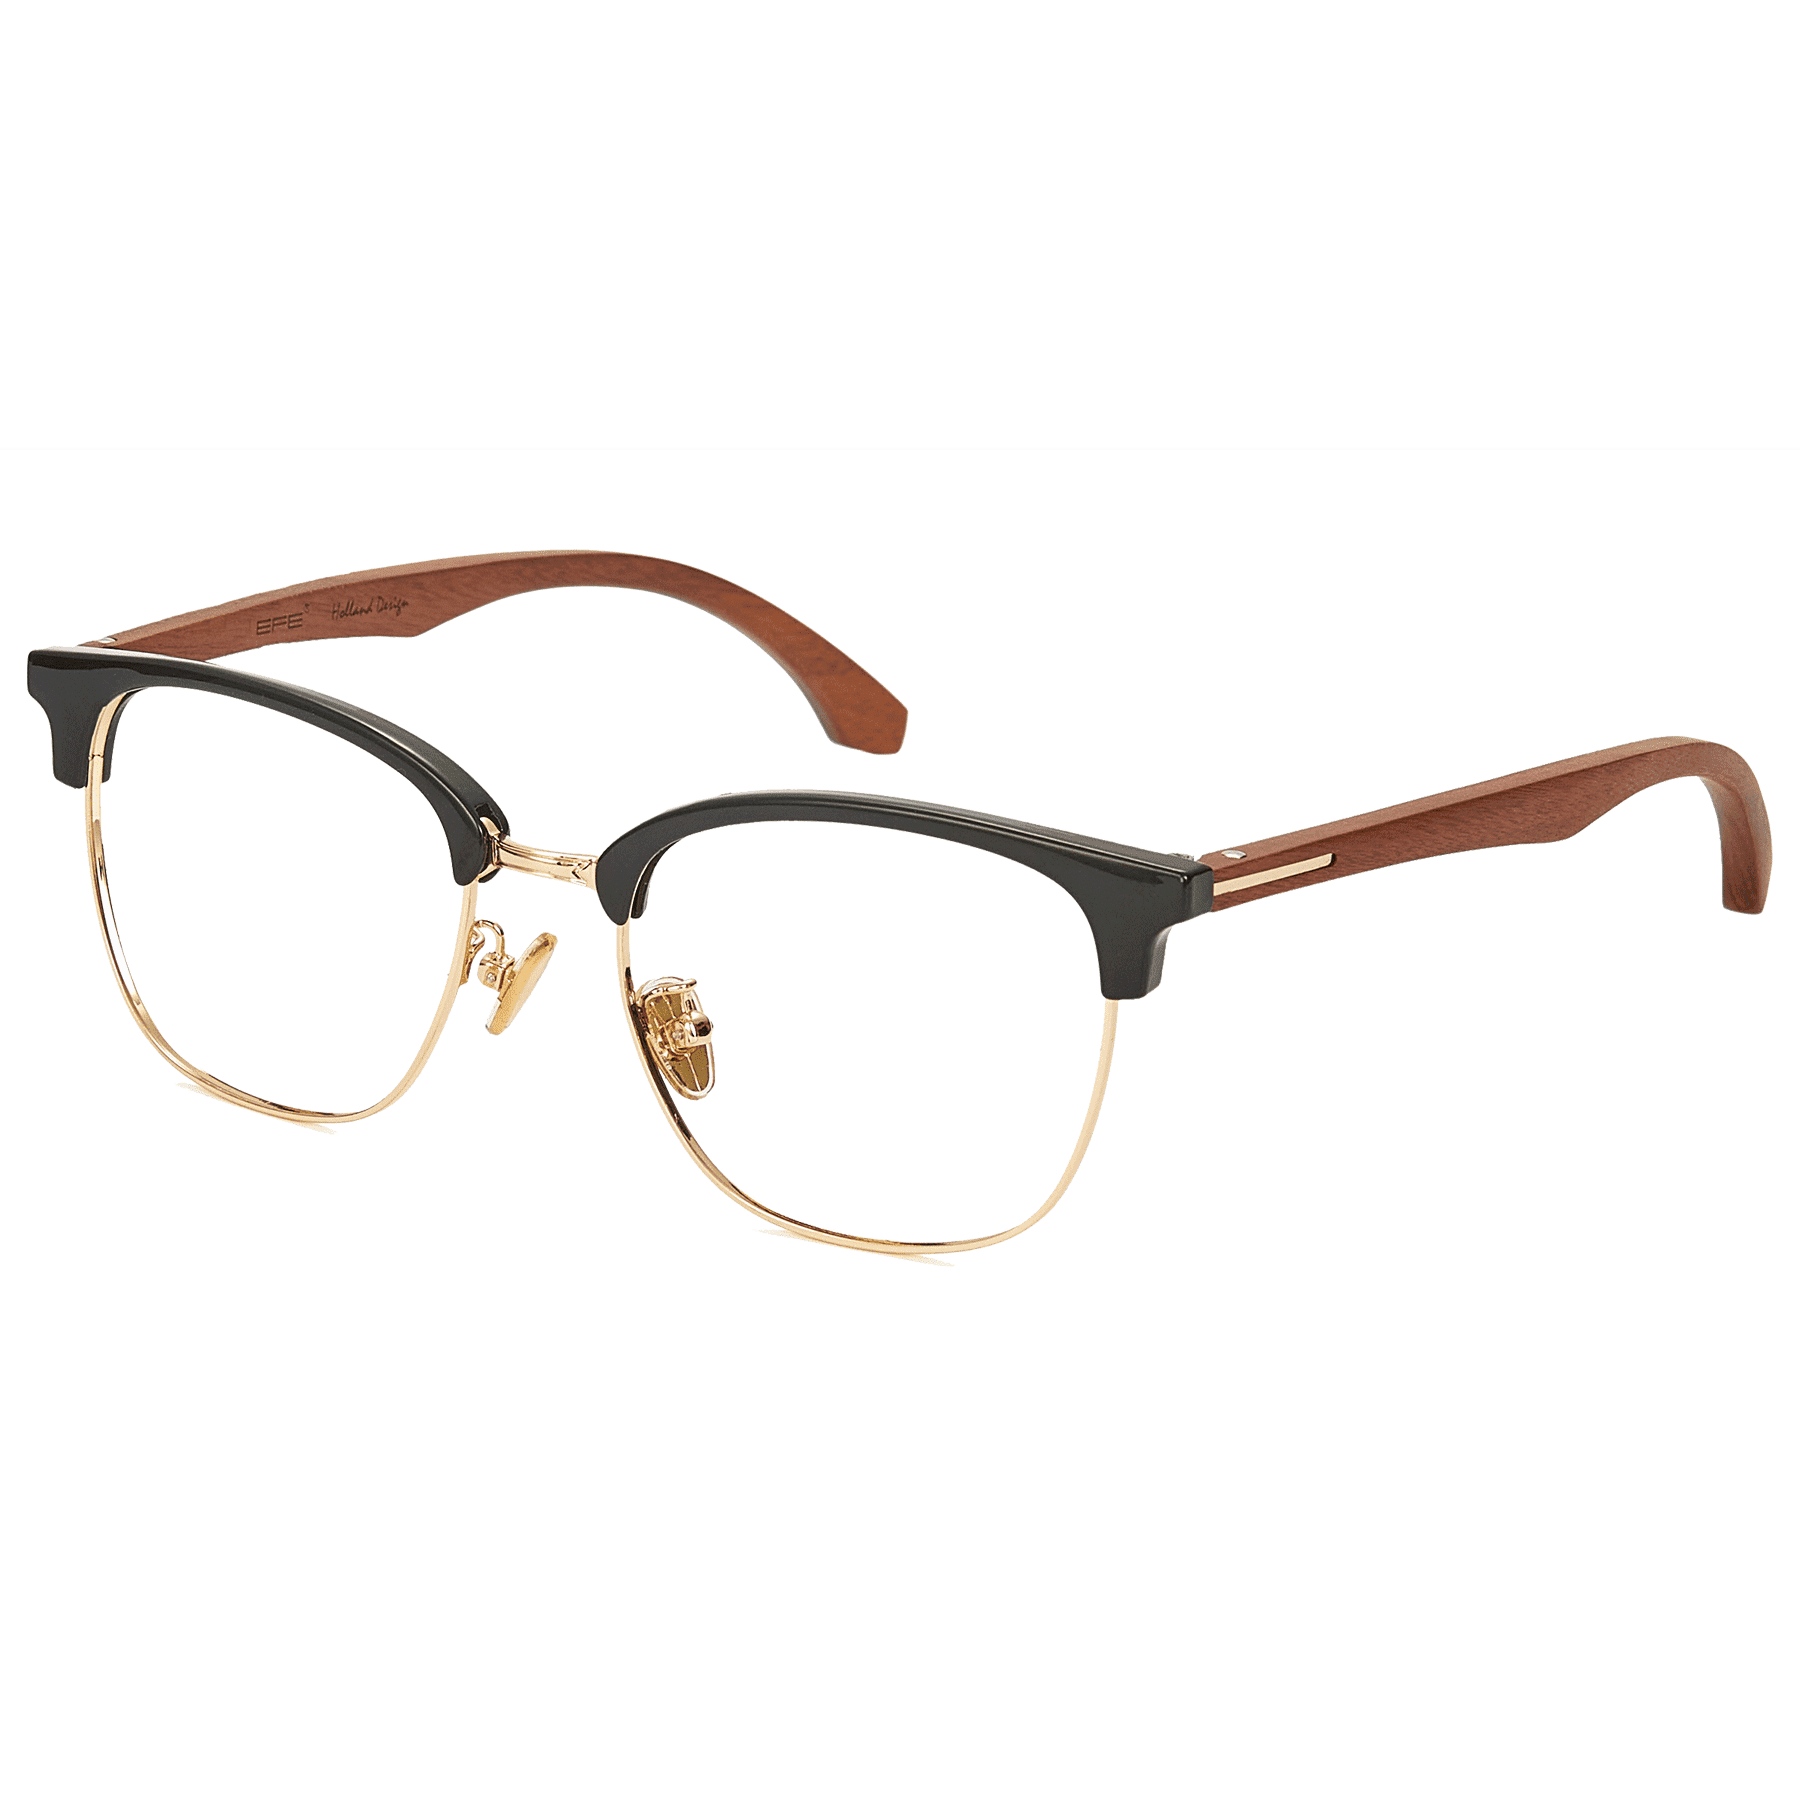 Pan - Browline Black-Gold Reading Glasses for Men